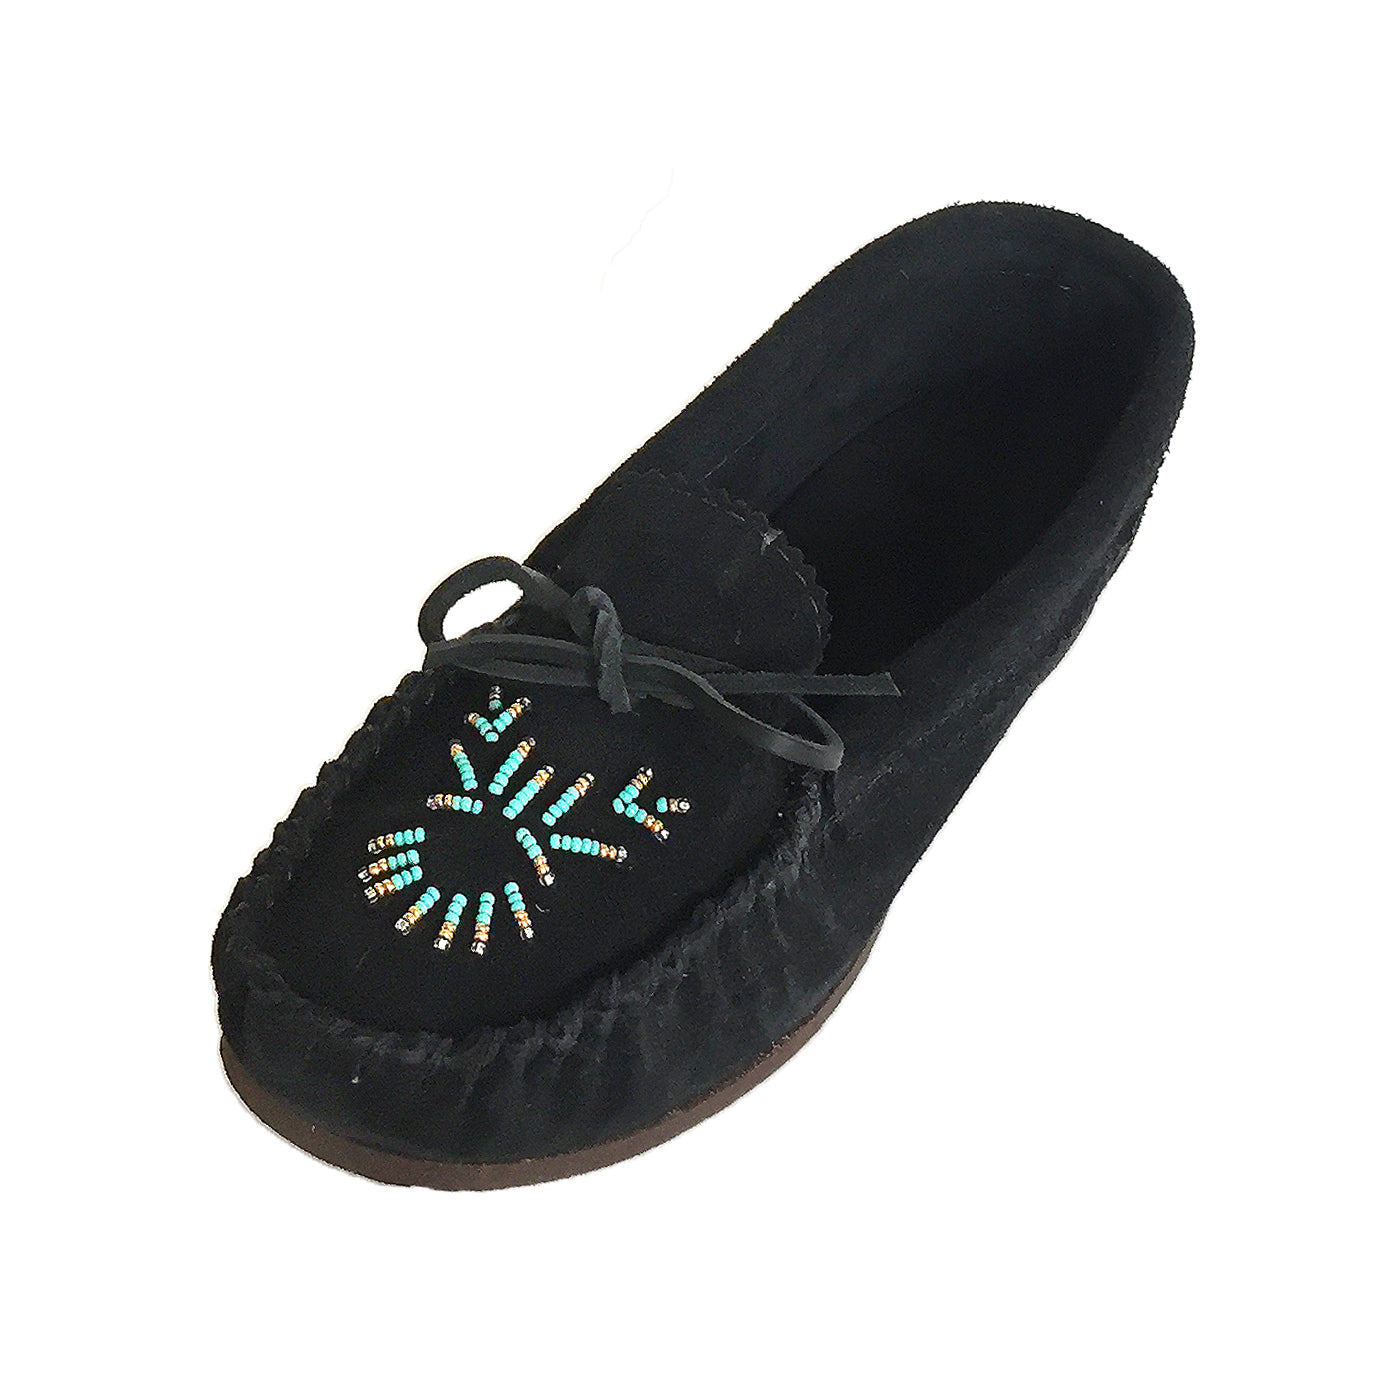 Rubber Sole Black Suede Moccasin Shoes 